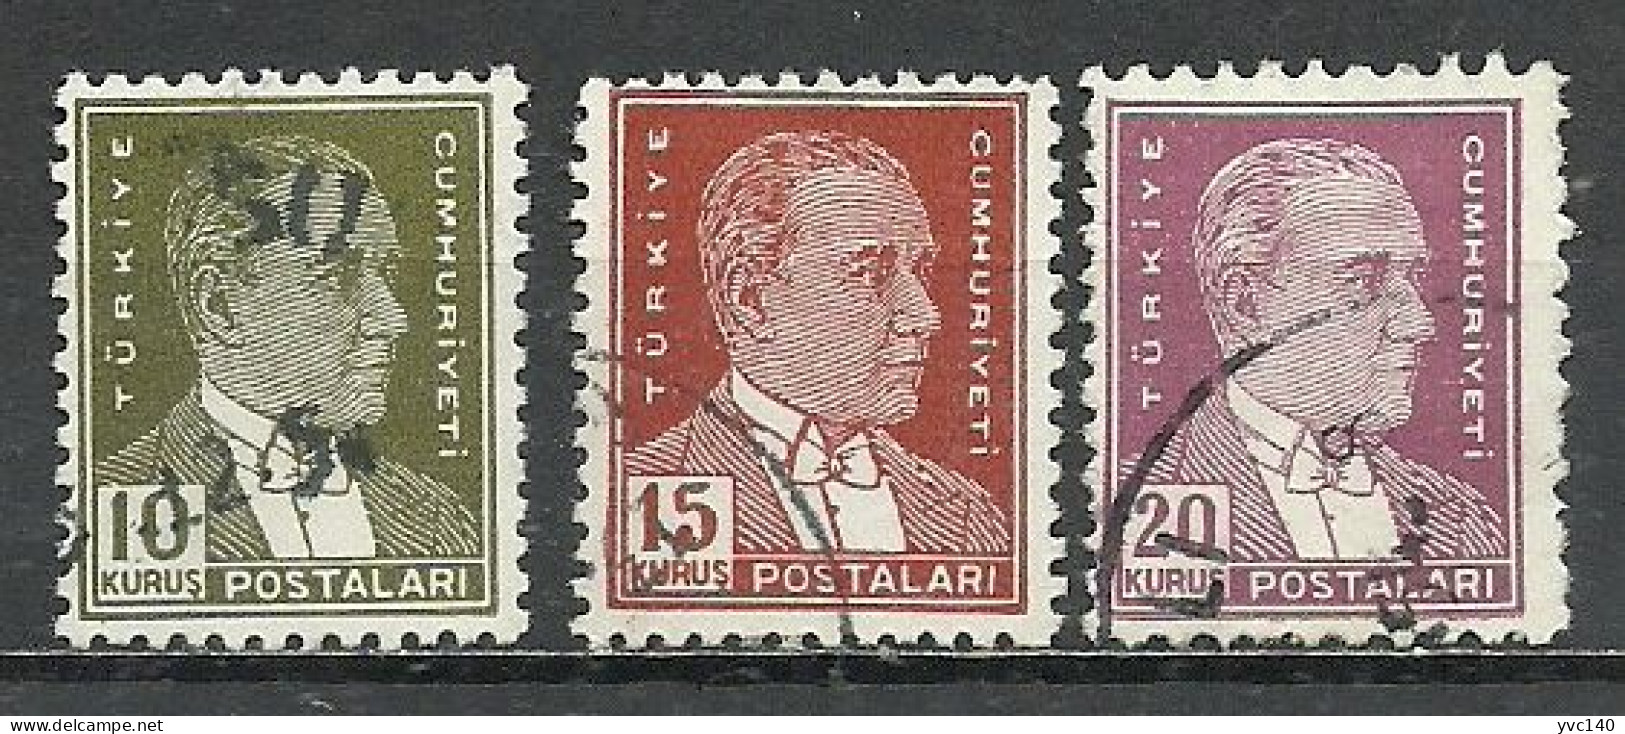 Turkey; 1953 8th Ataturk Issue Stamps - Usati